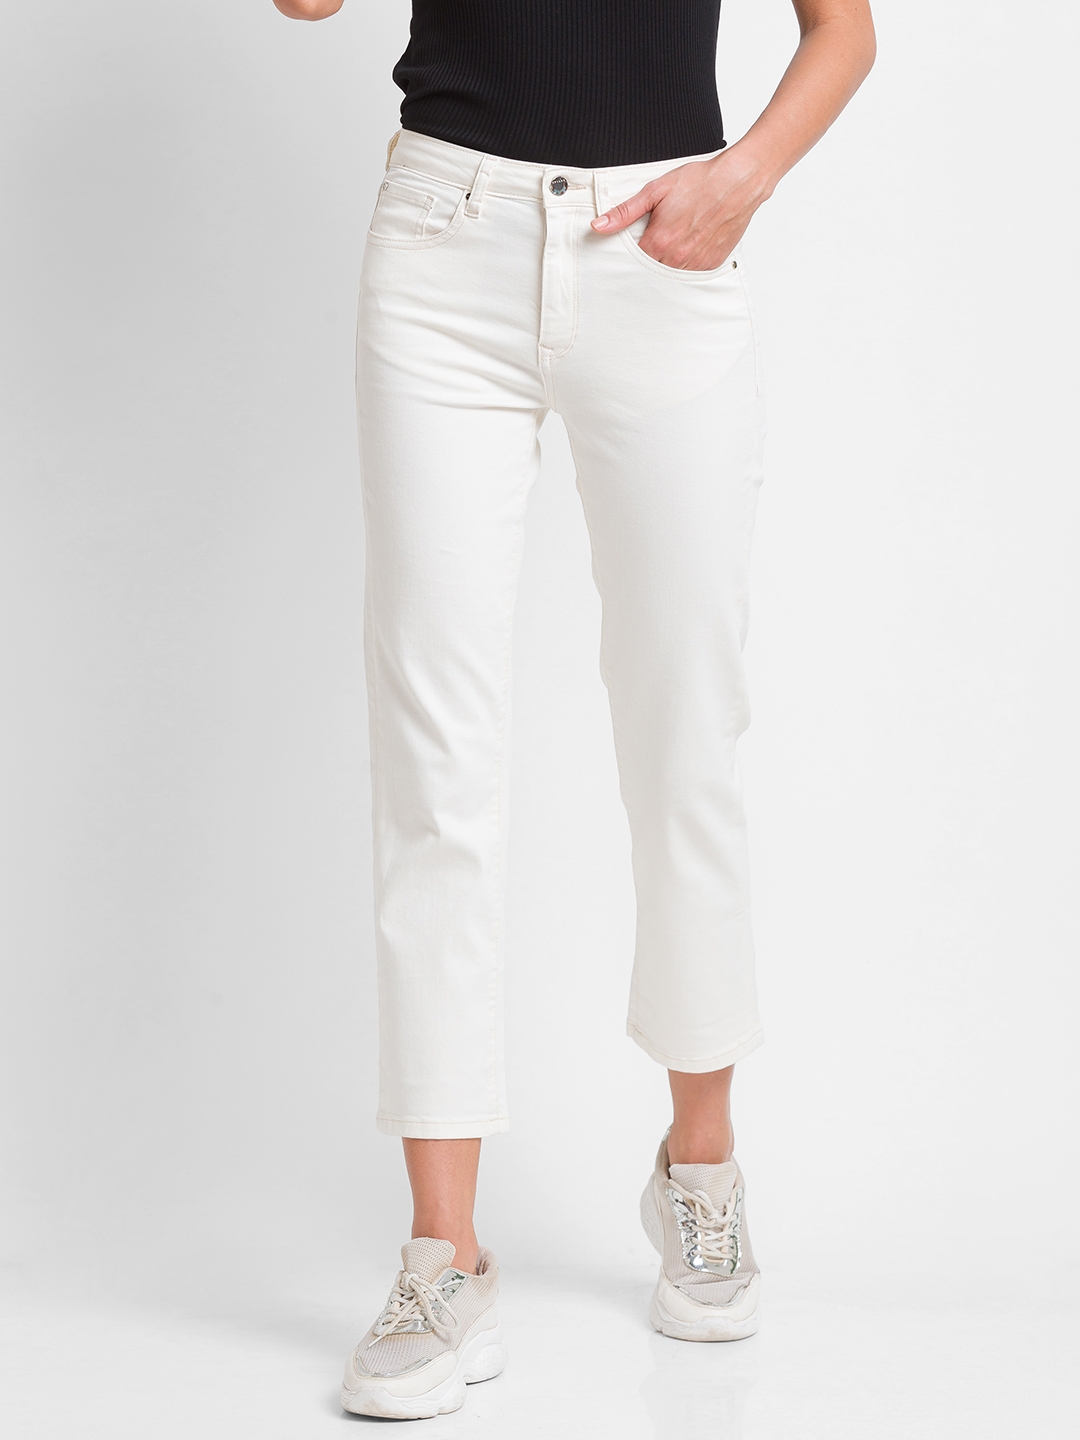 Women's White Lycra Solid Slim Jeans